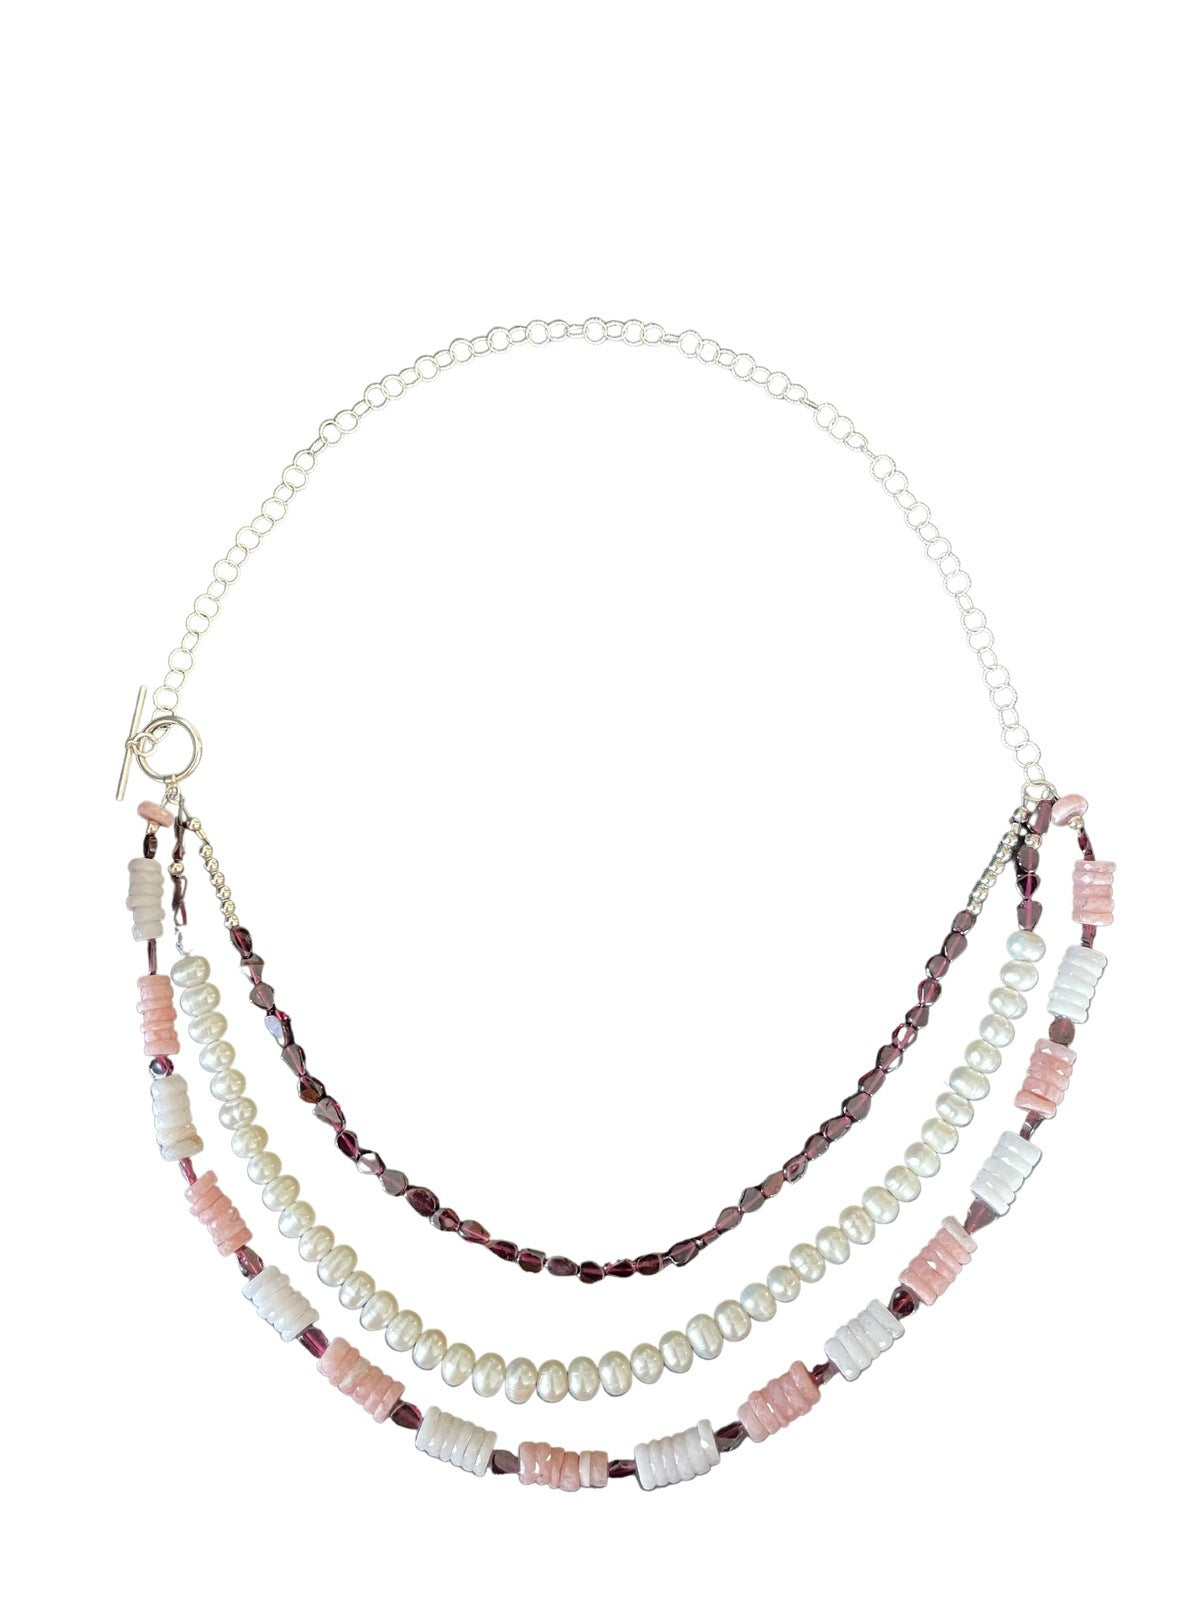 Triple Opals, Garnets and Pearls - Sheila Marie Opals